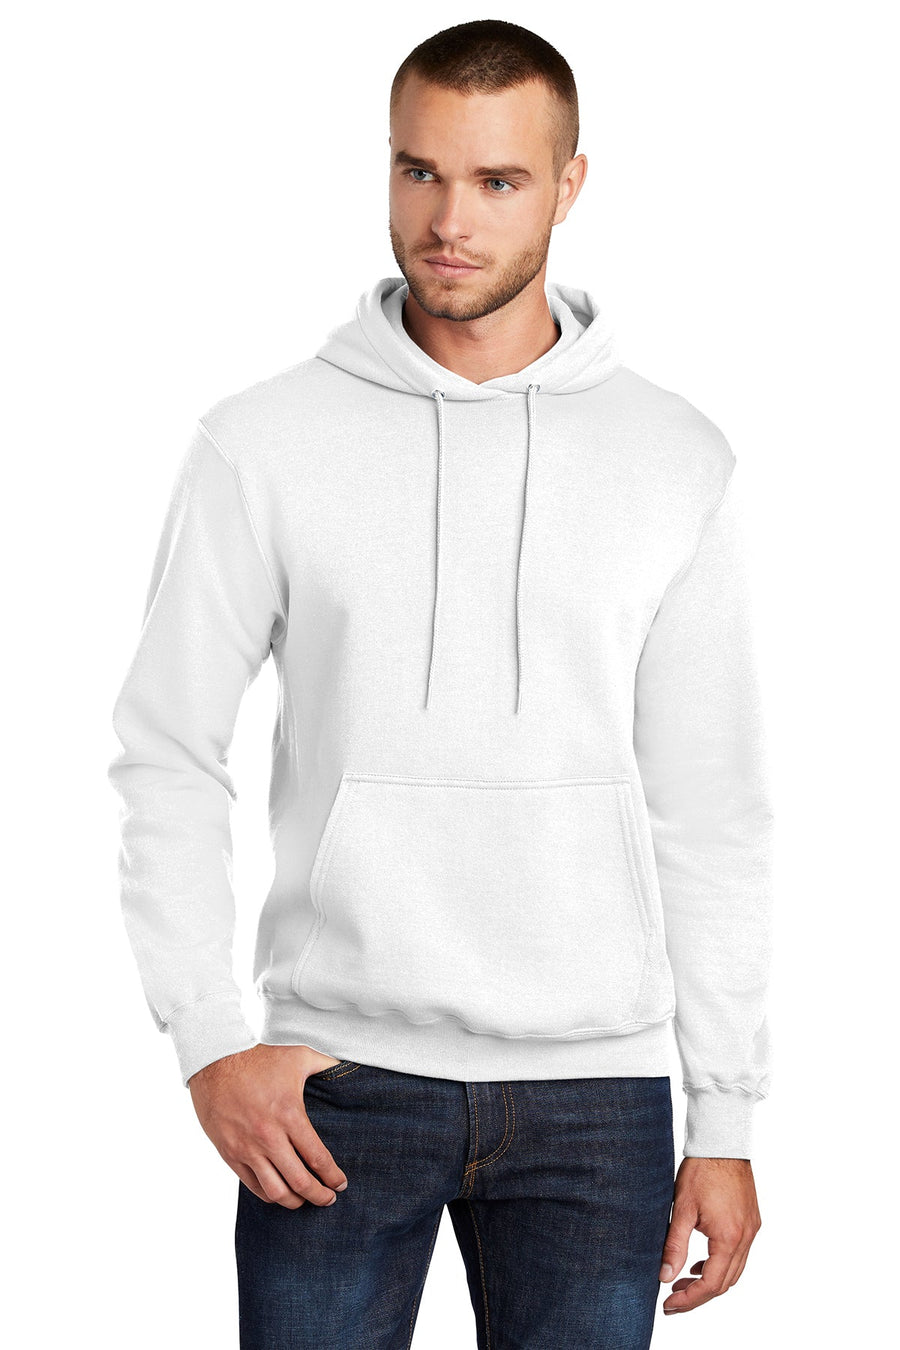 Core Fleece Pullover Hooded Sweatshirt - Clay Soccer